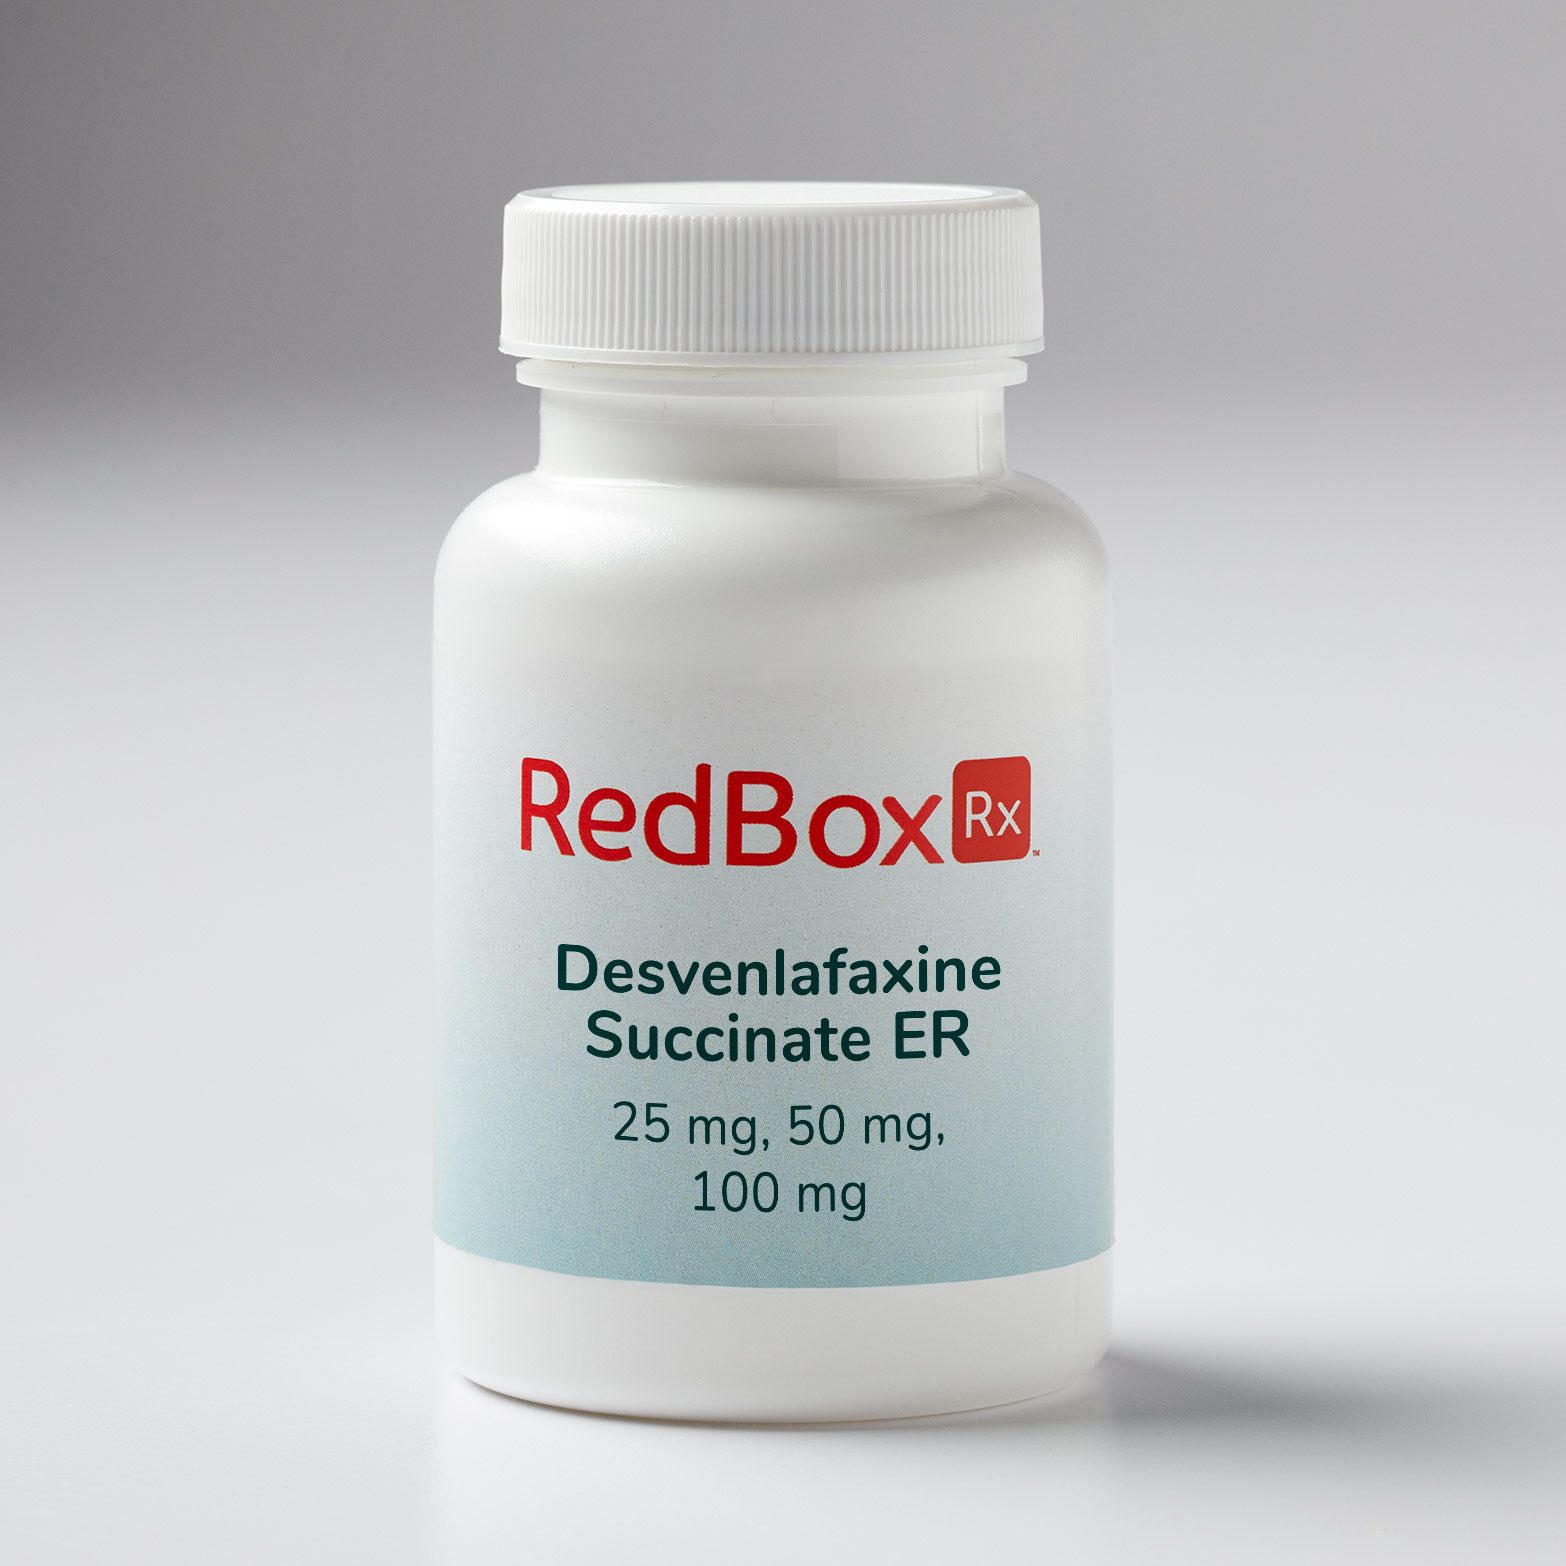 RedBox Rx Desvenlafaxine Succinate ER Med Bottle